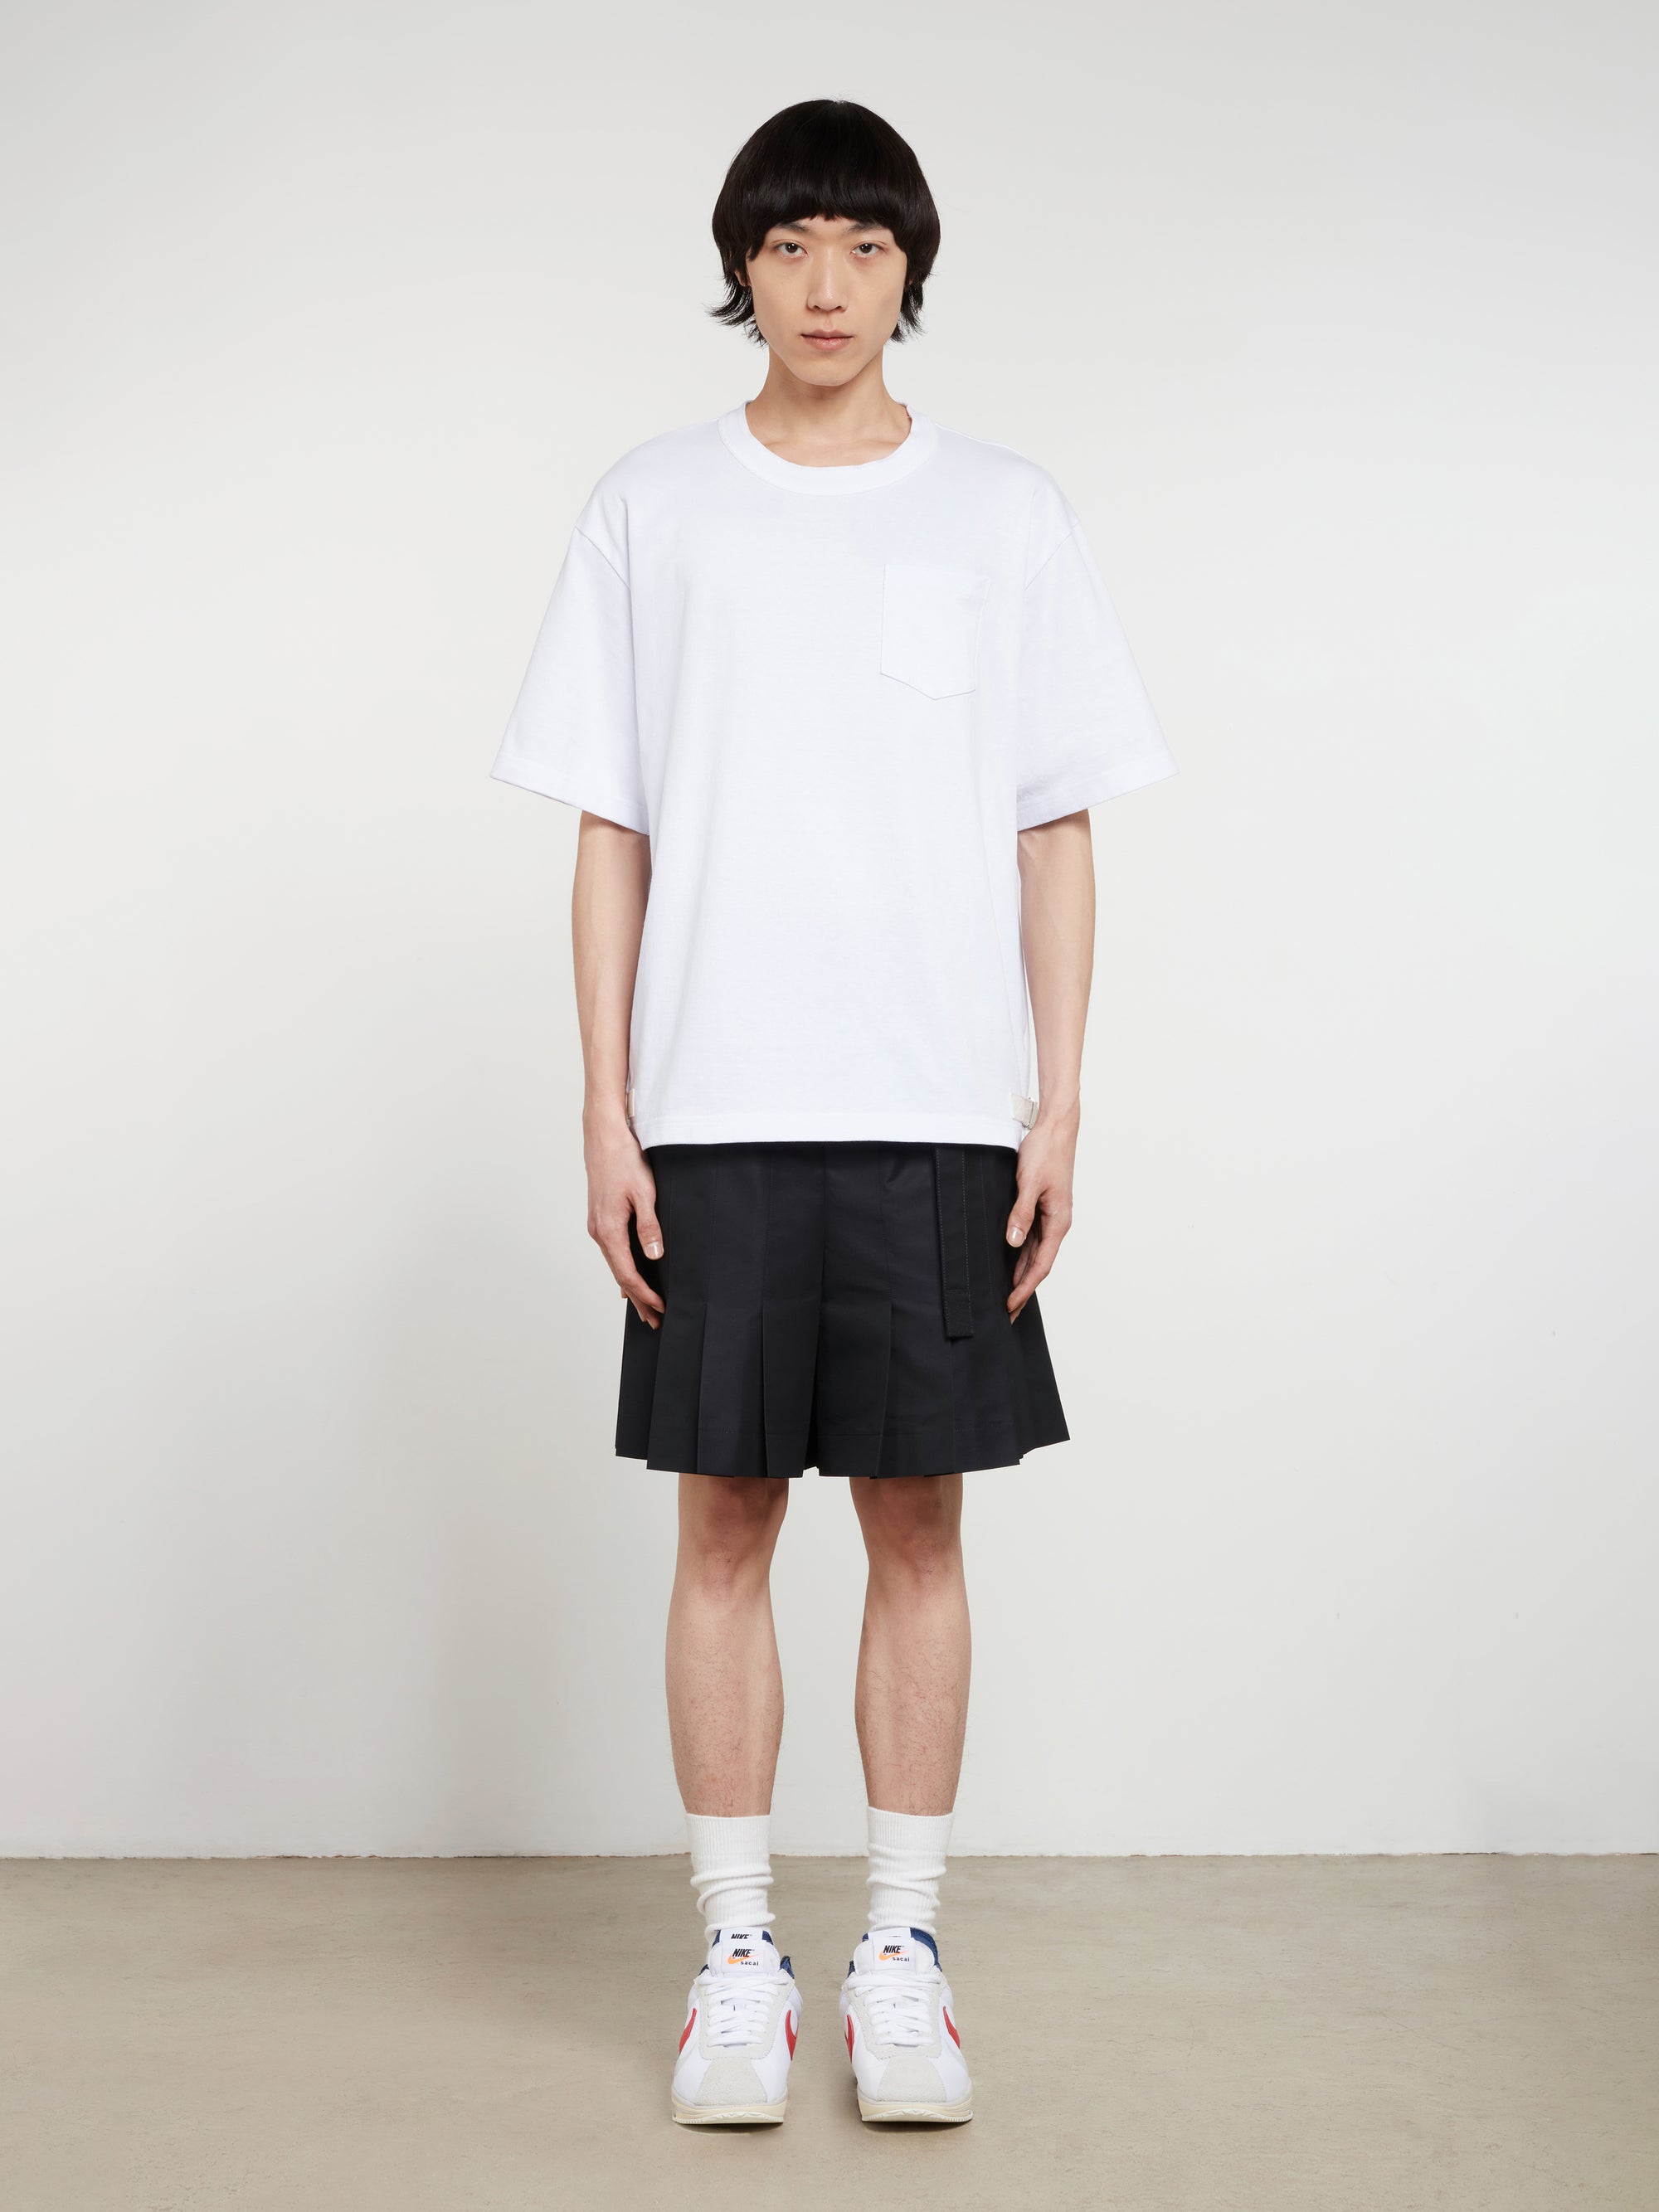 Sacai - Men’s Nylon Twill Cotton Jersey T-shirt - (Off White) view 4